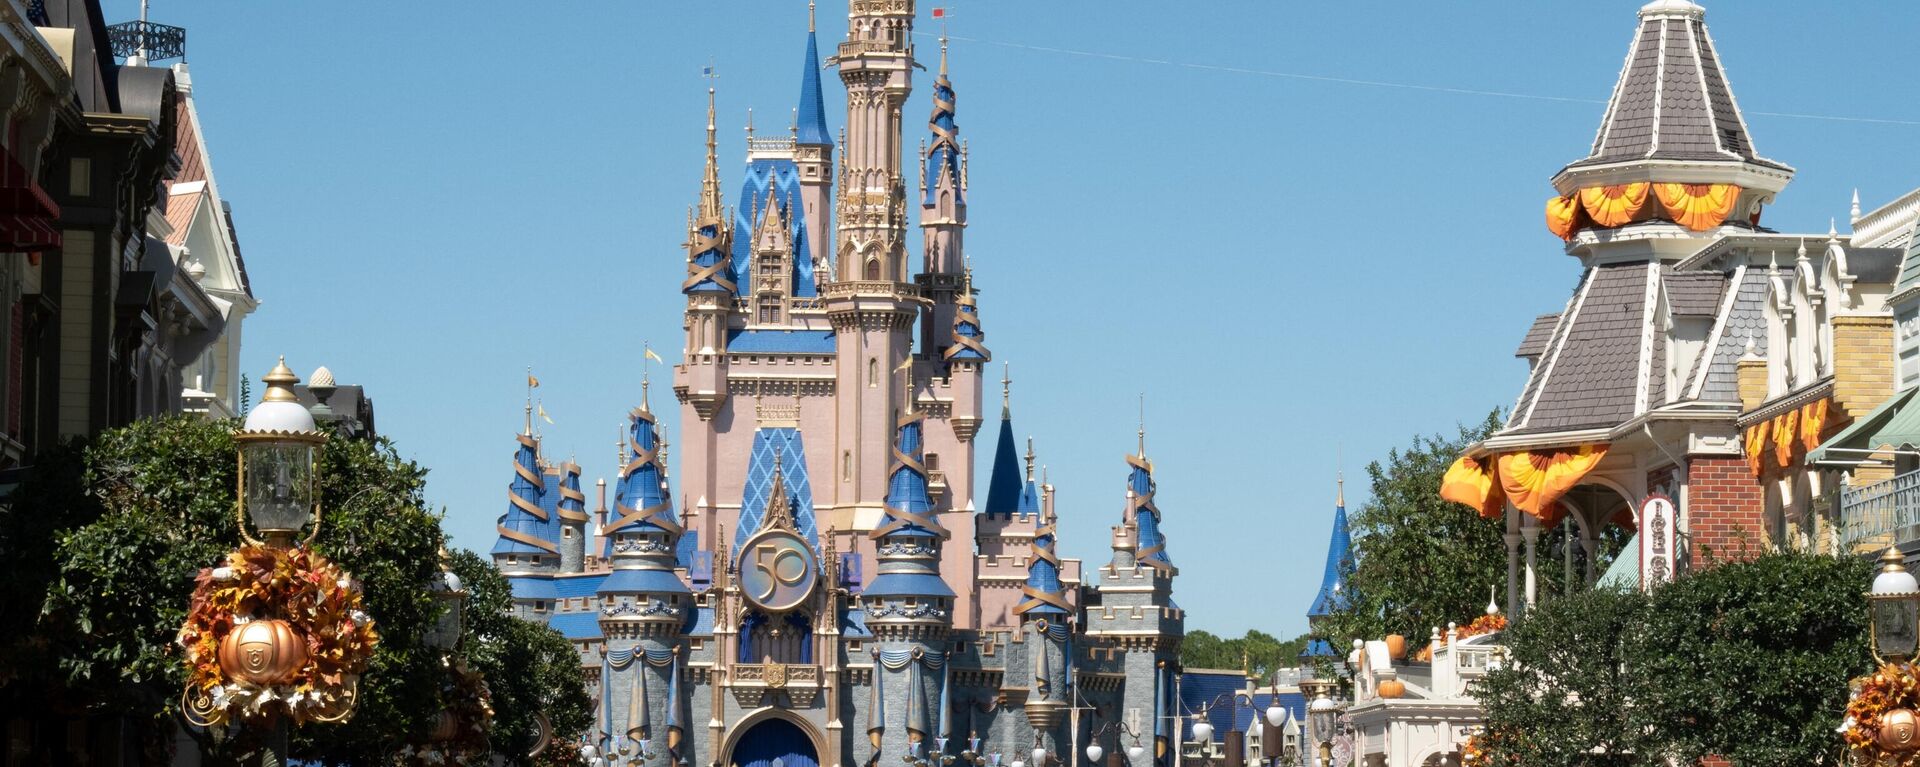 The Magic Kingdom at Walt Disney World on September 30, 2022 in Orlando, Florida.  - Sputnik International, 1920, 02.04.2023